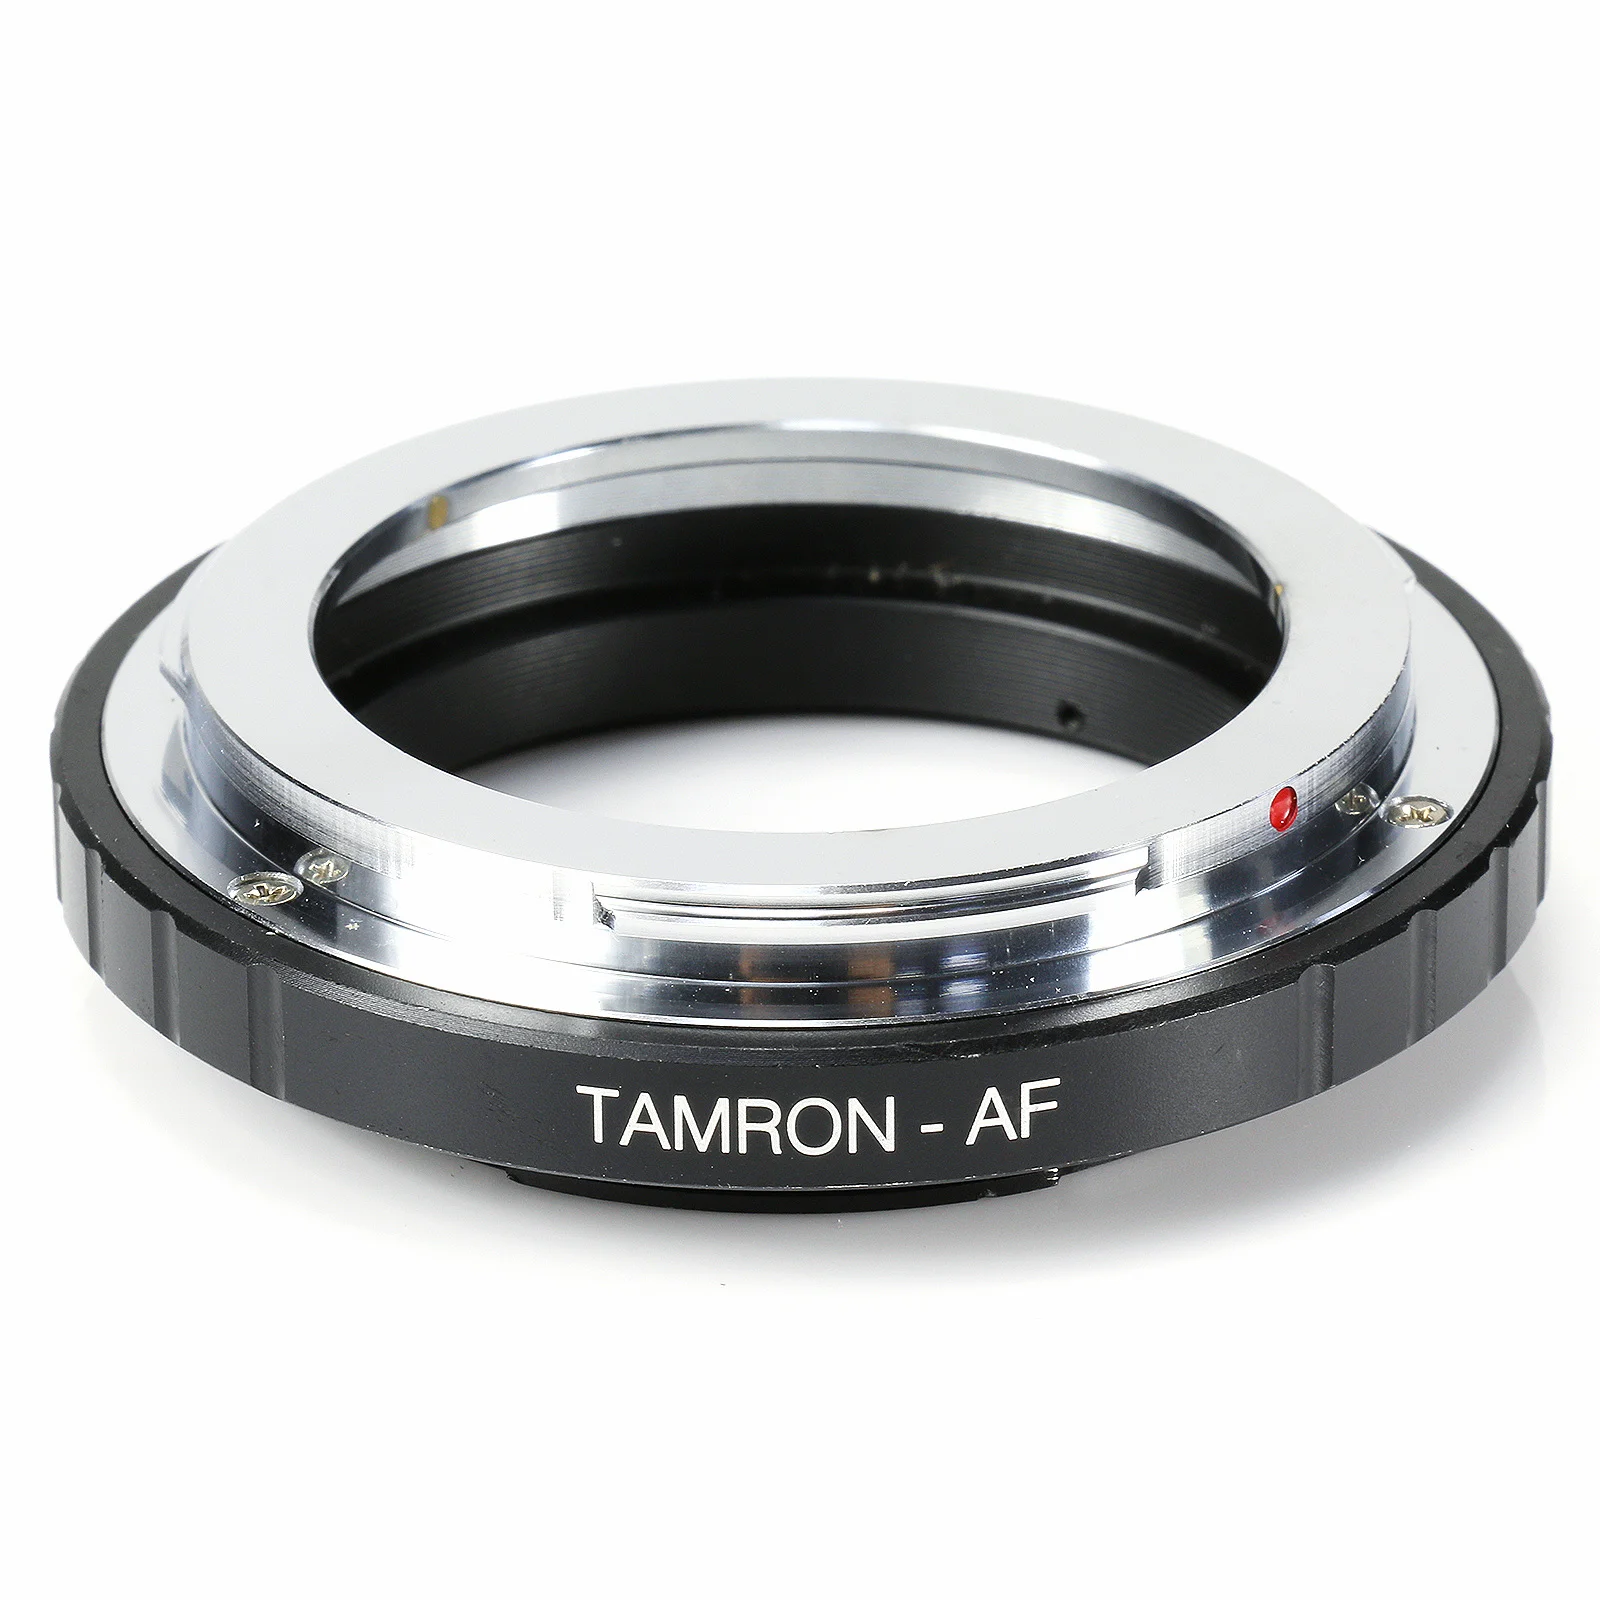 

TL-AF Tamron Adaptall 2 Lens to Sony Alpha Mount AF MA Adapter A900 A850 A700 A560 A580 A550 A500 A58 A99 A57 A55 A37 A65